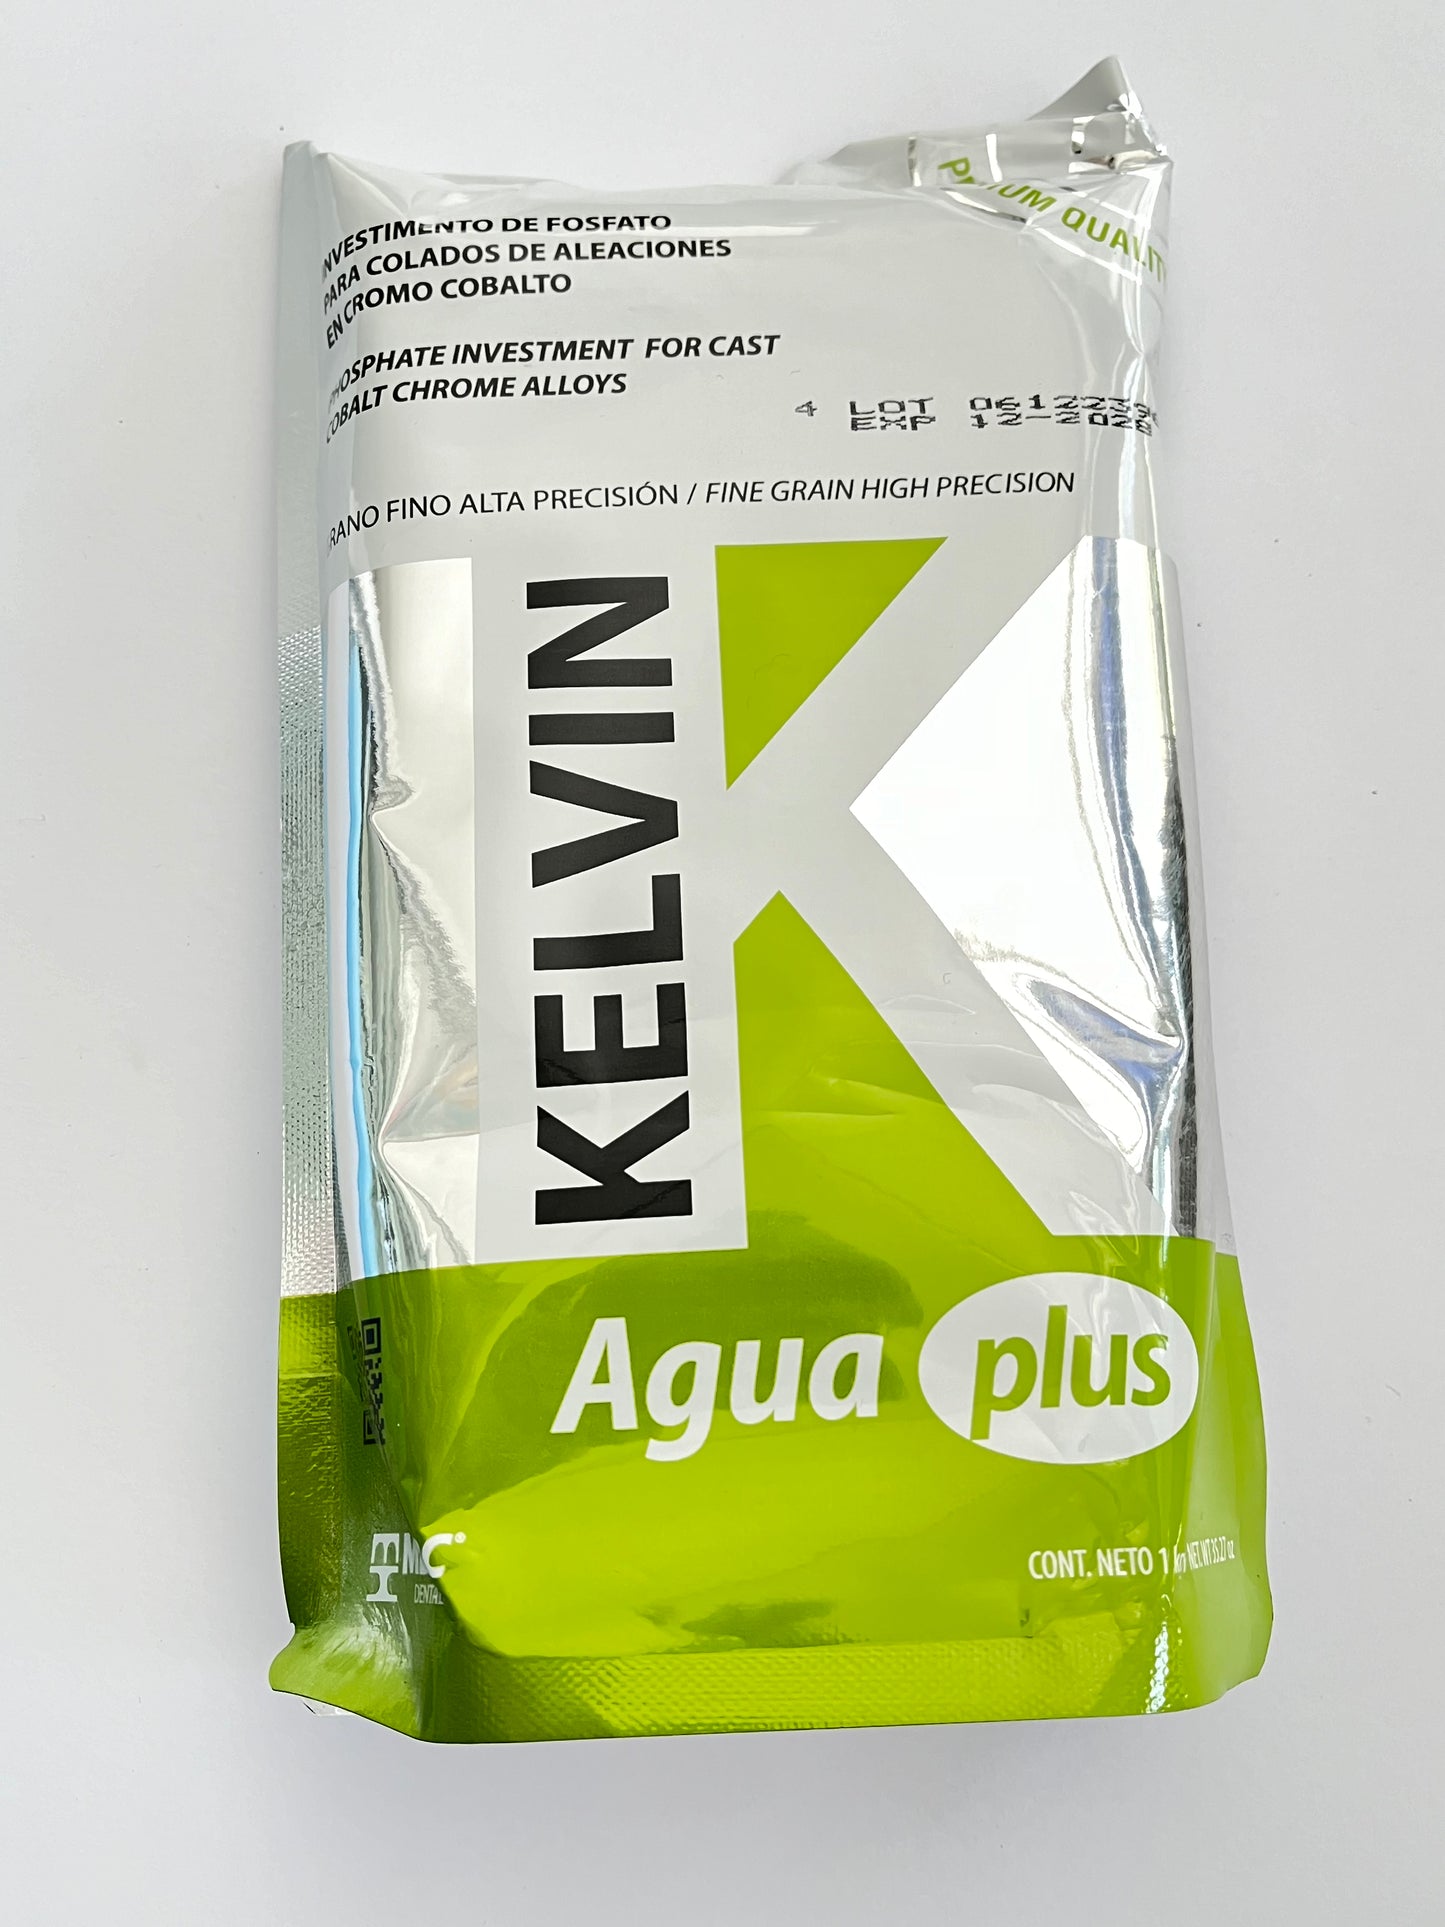 Investimento kelvin agua plus bolsa 1 kg